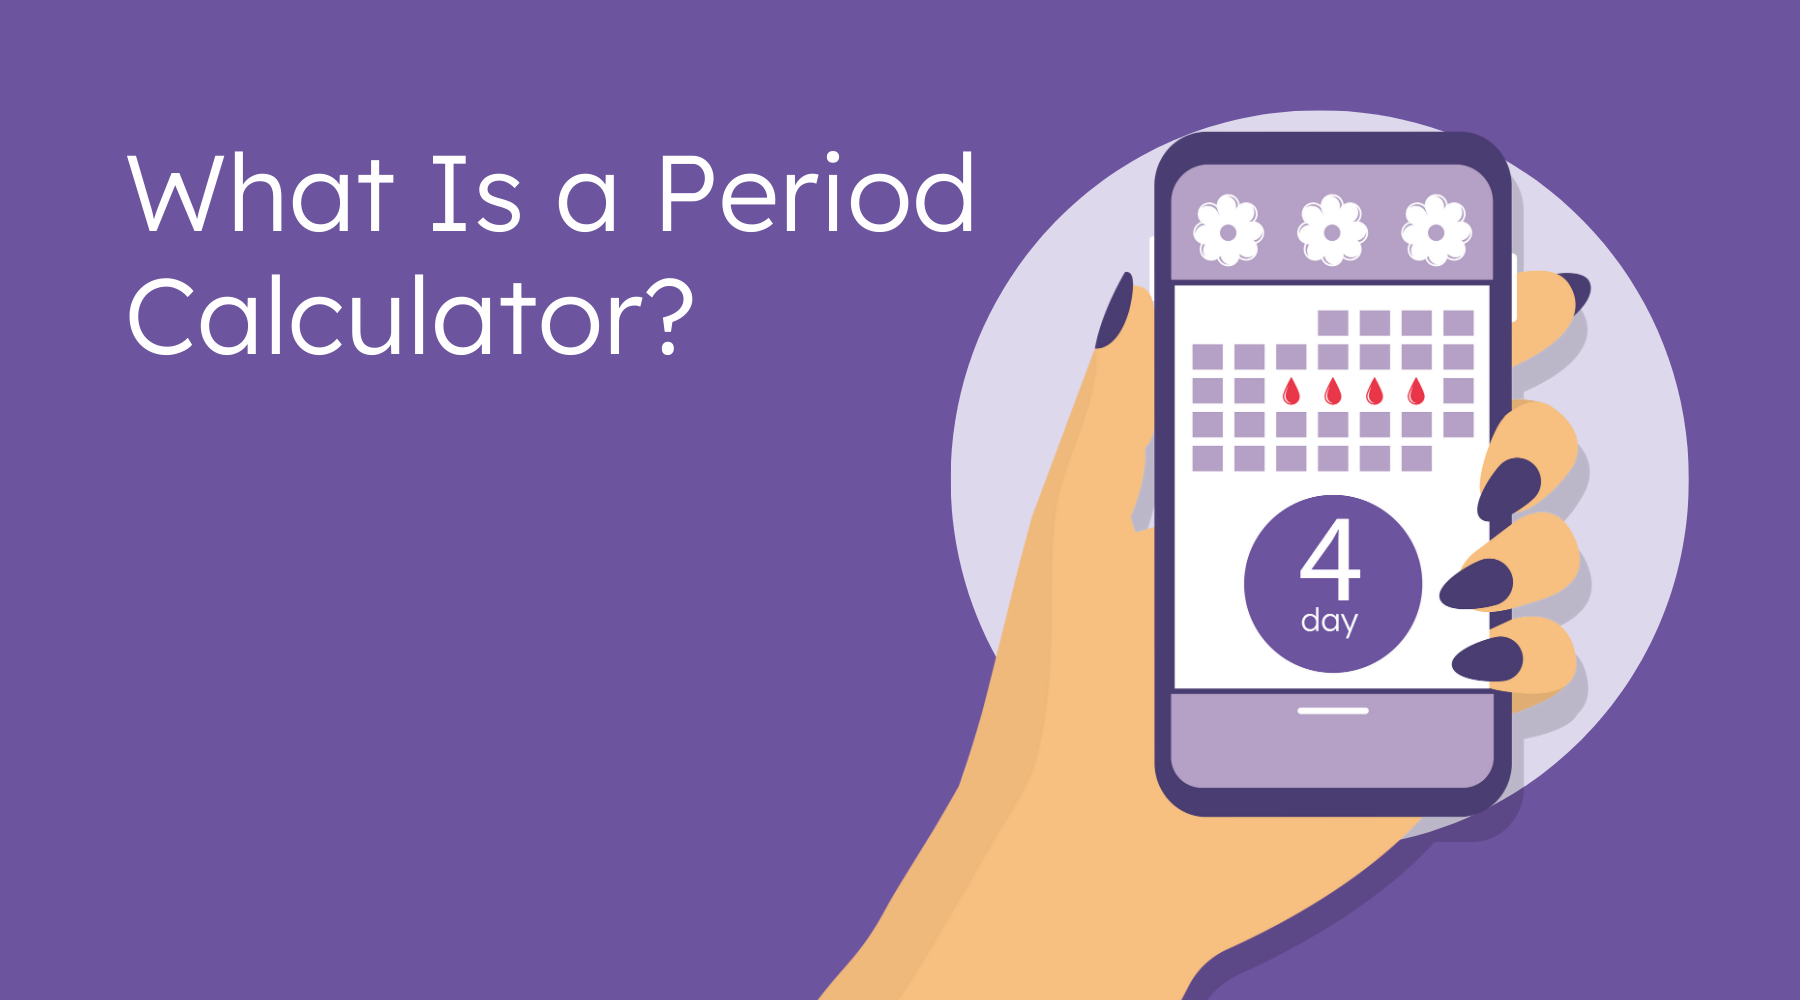 What is a period calculator?